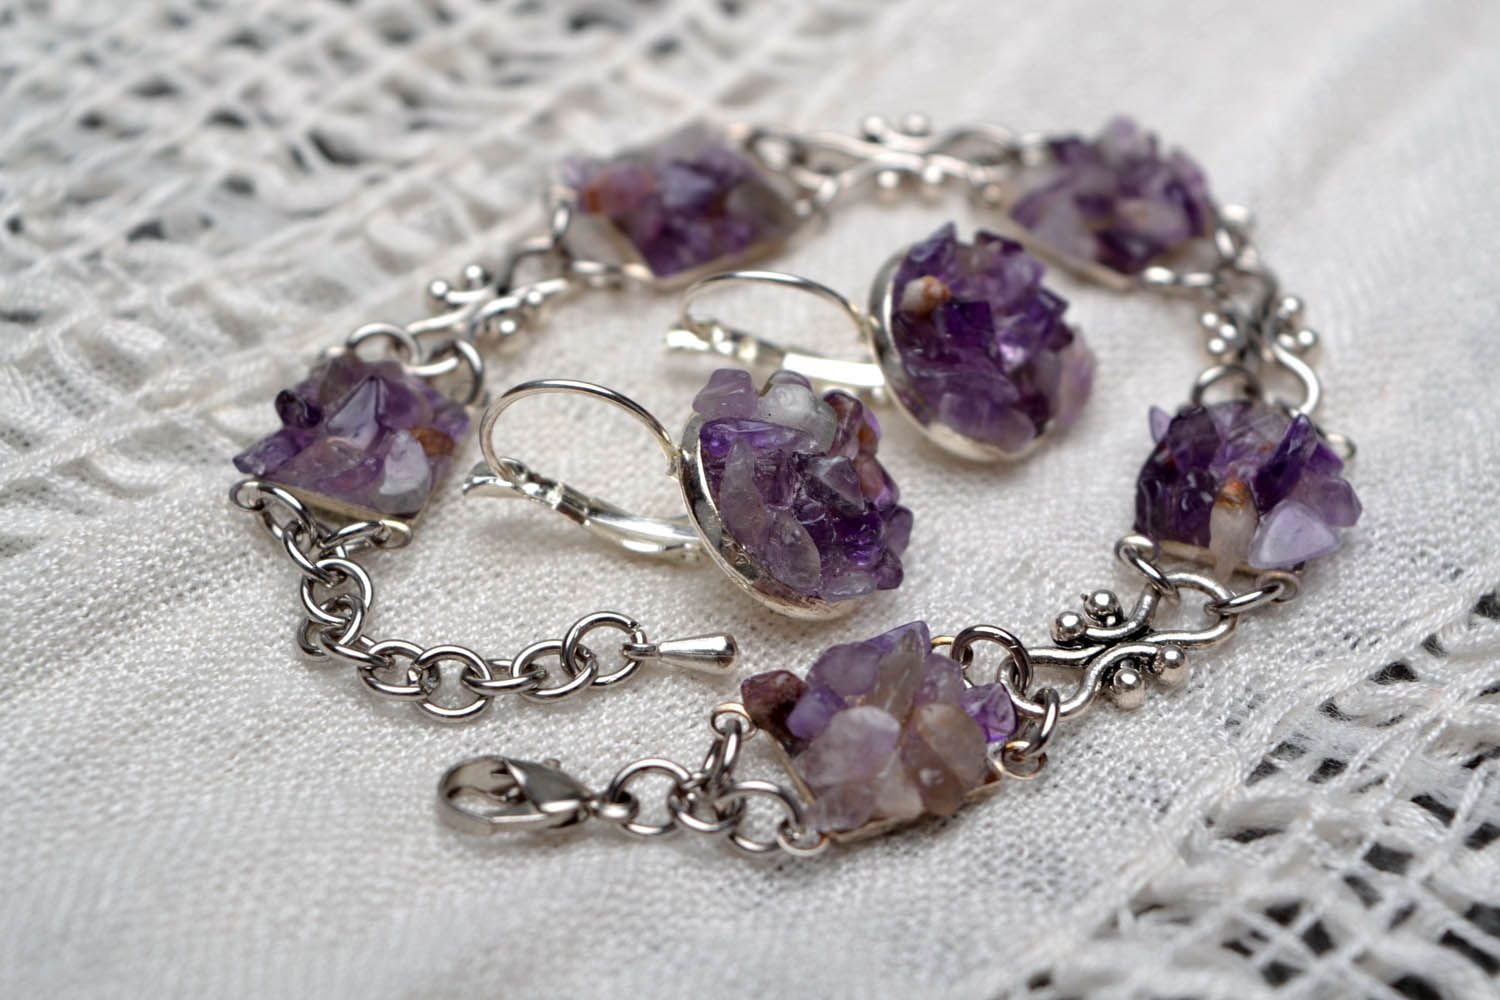 Amethyst earrings and bracelet photo 1